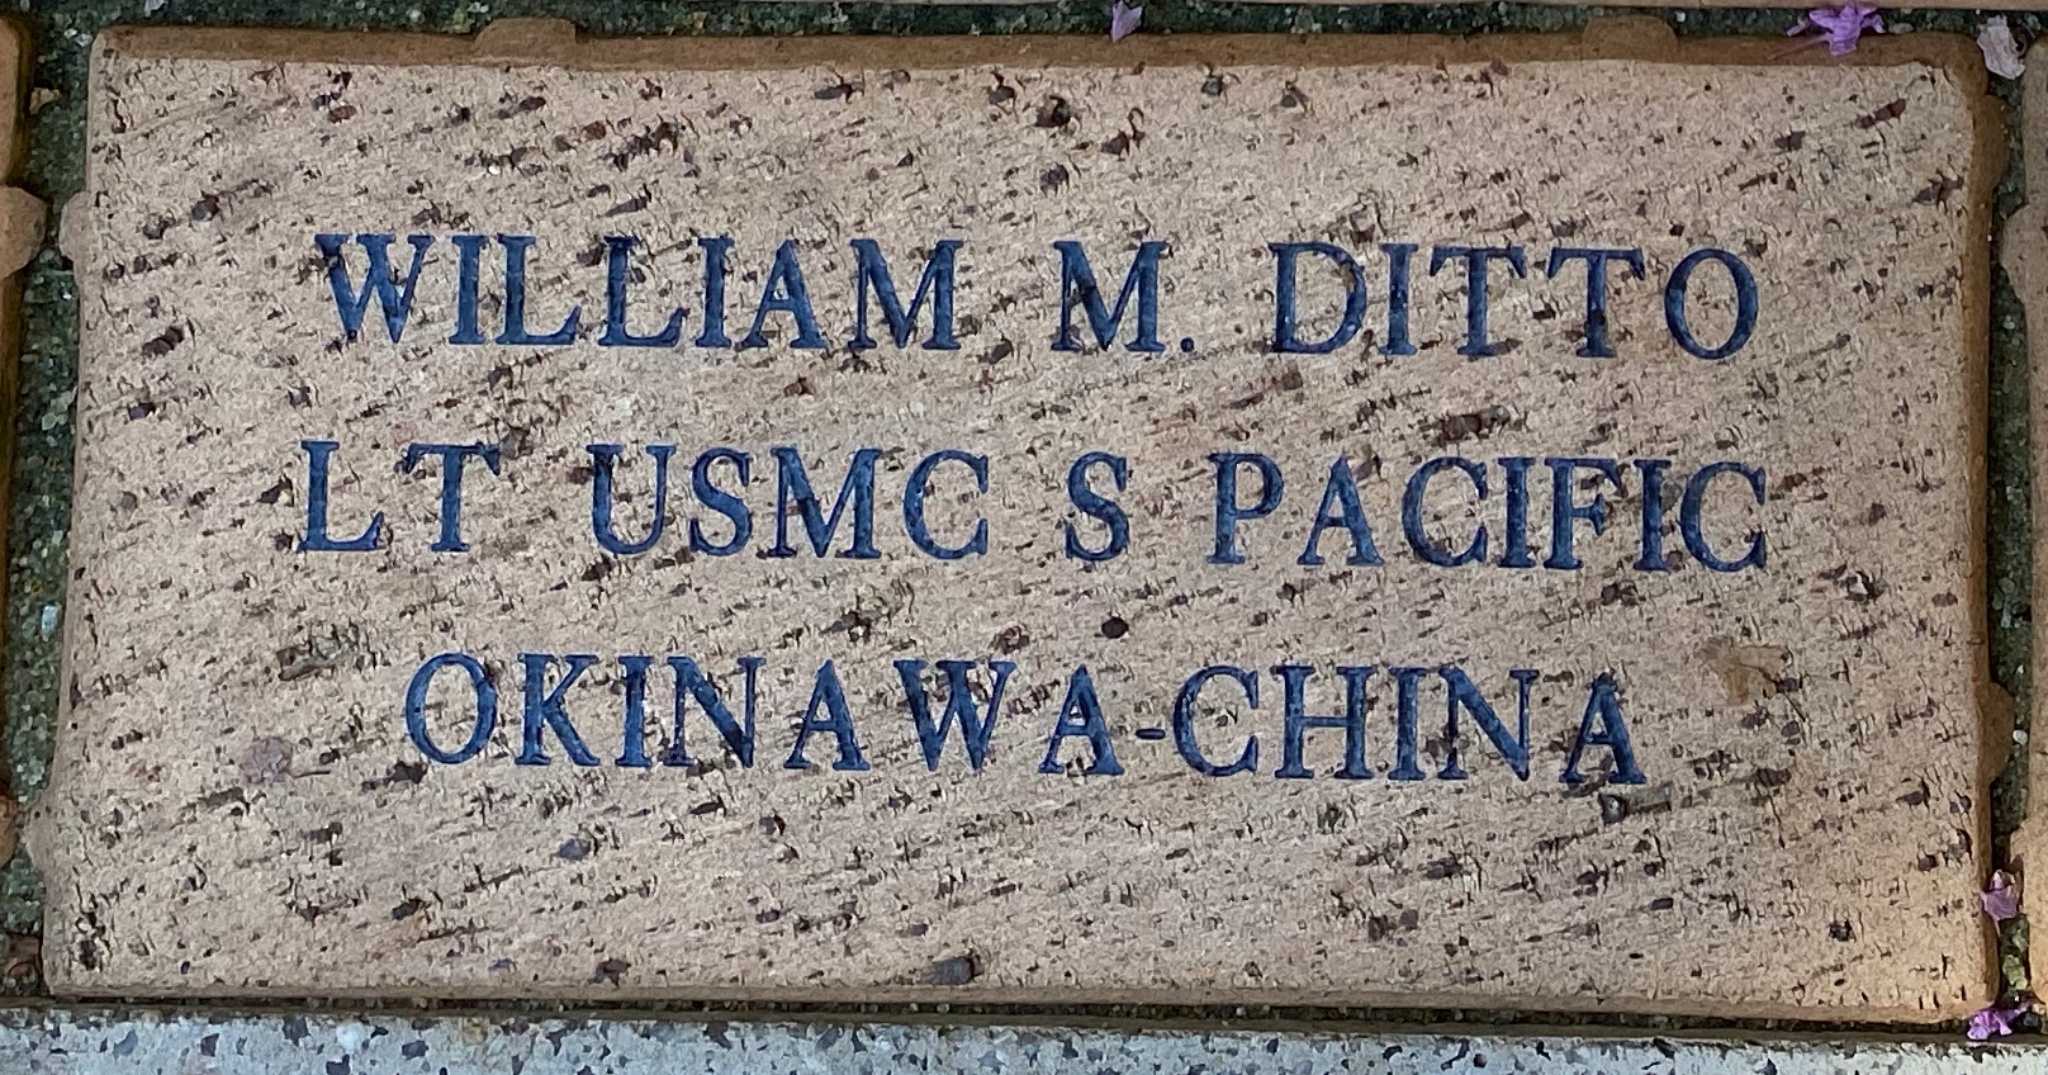 WILLIAM M DITTO LT USMC S PACIFIC OKINAWA N CHINA